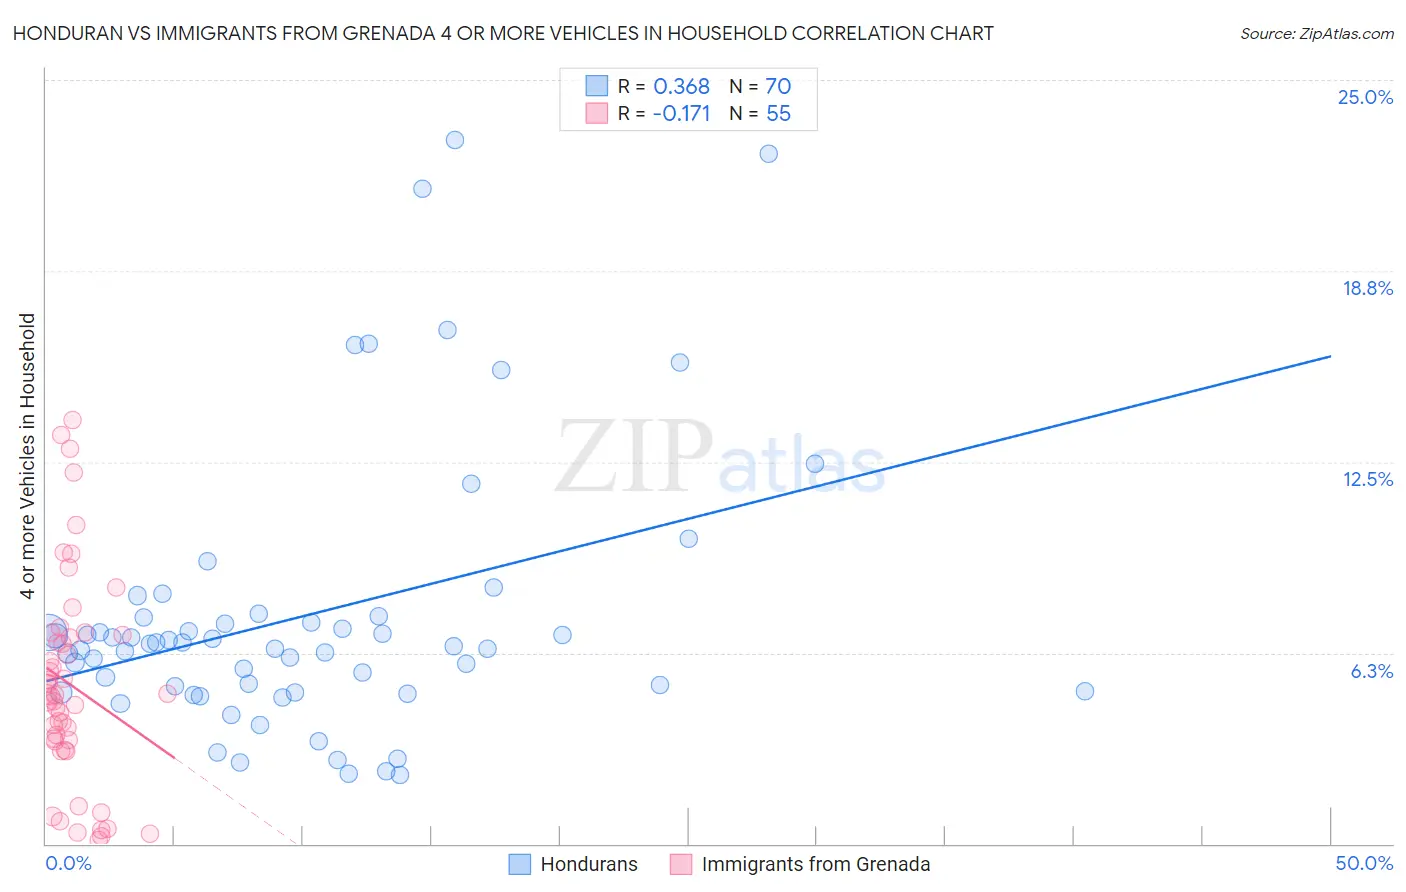 Honduran vs Immigrants from Grenada 4 or more Vehicles in Household